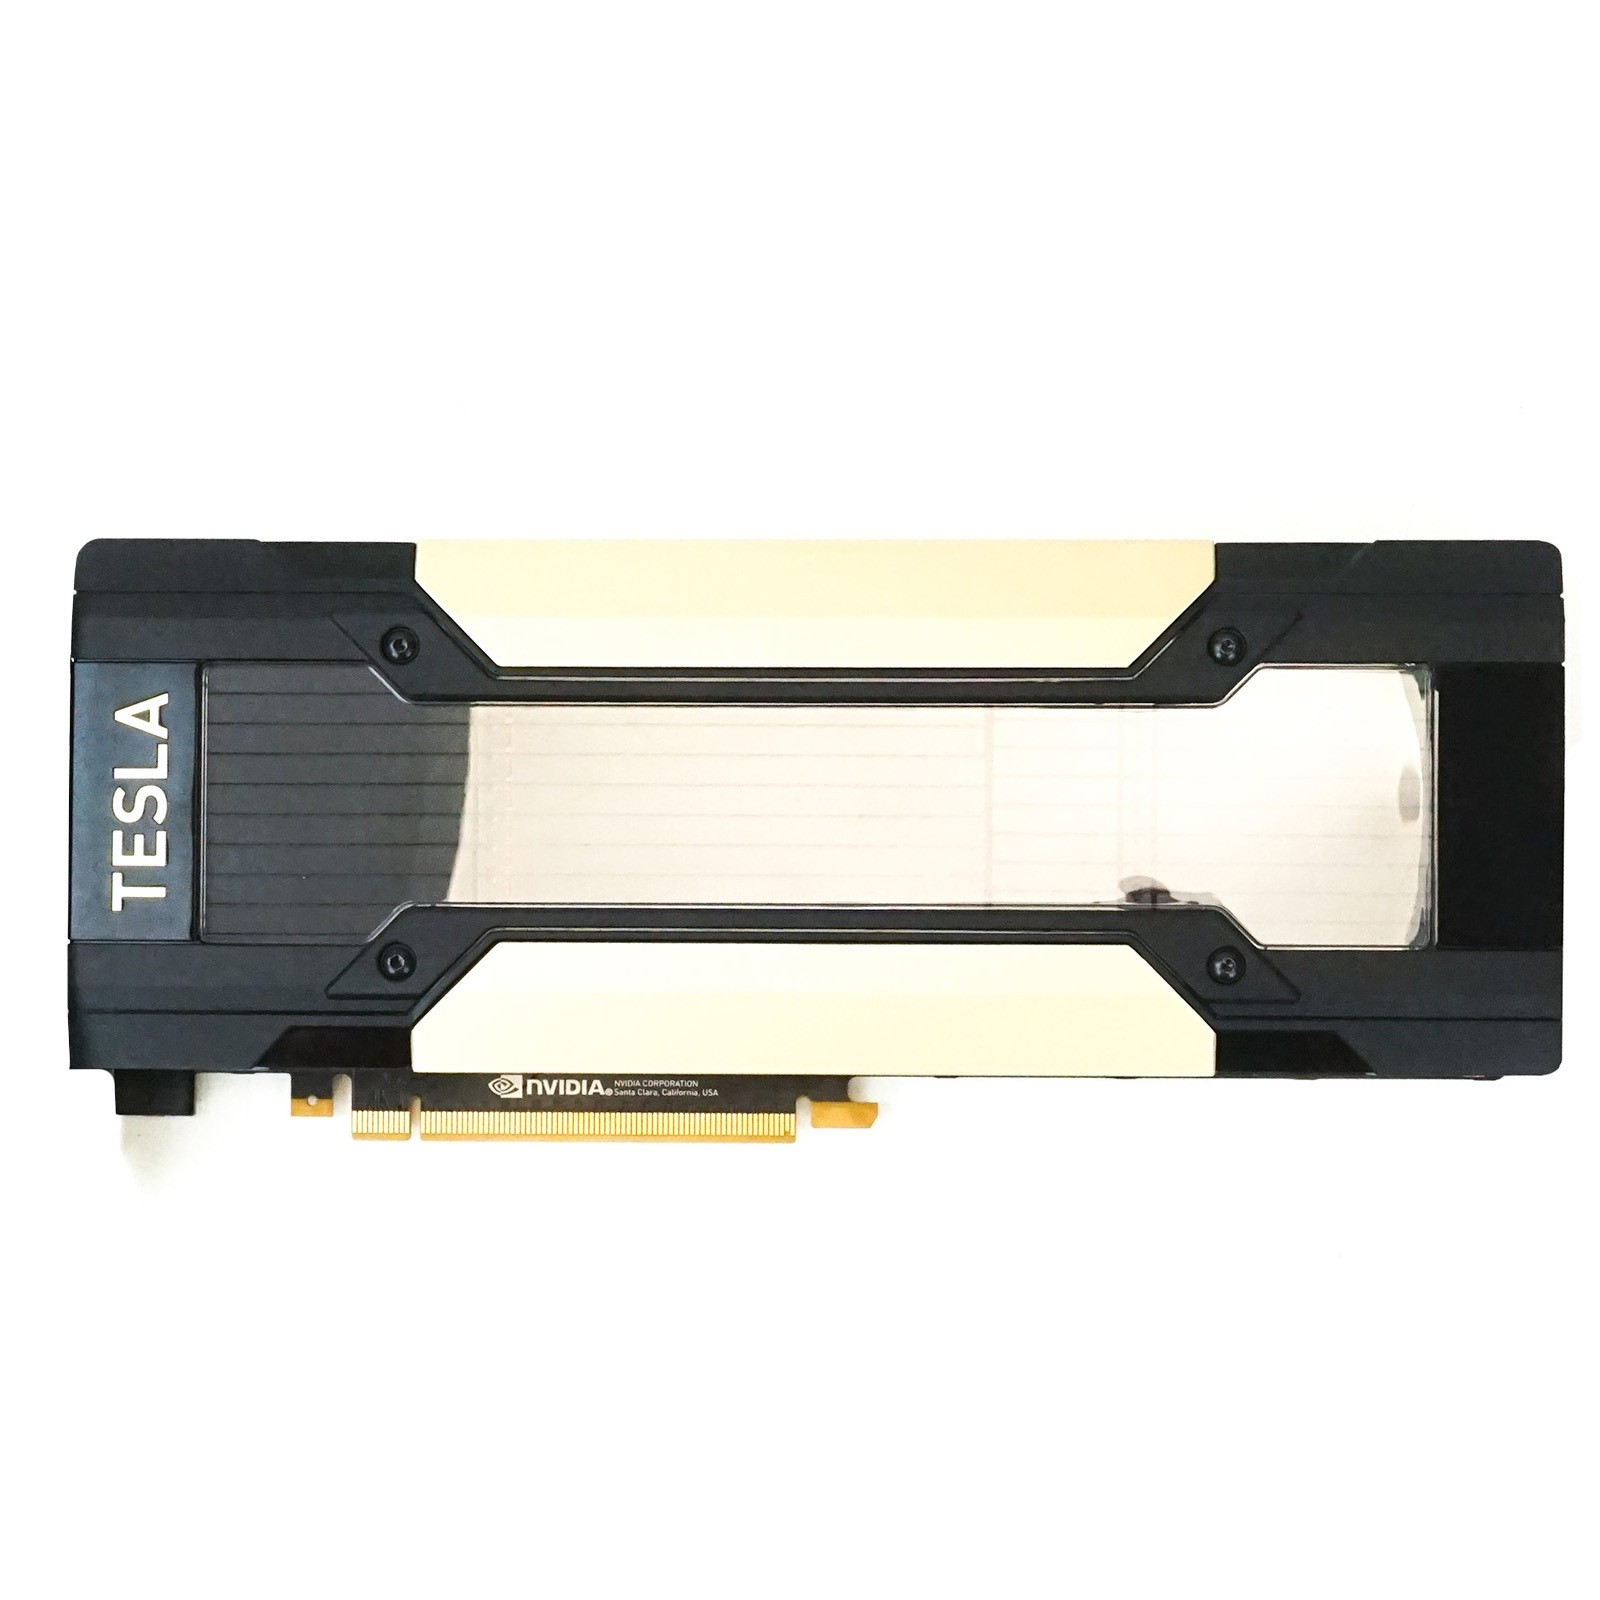 Nvidia Tesla V100 - PCIe-x16 16GB HBM2 GPU Accelerator